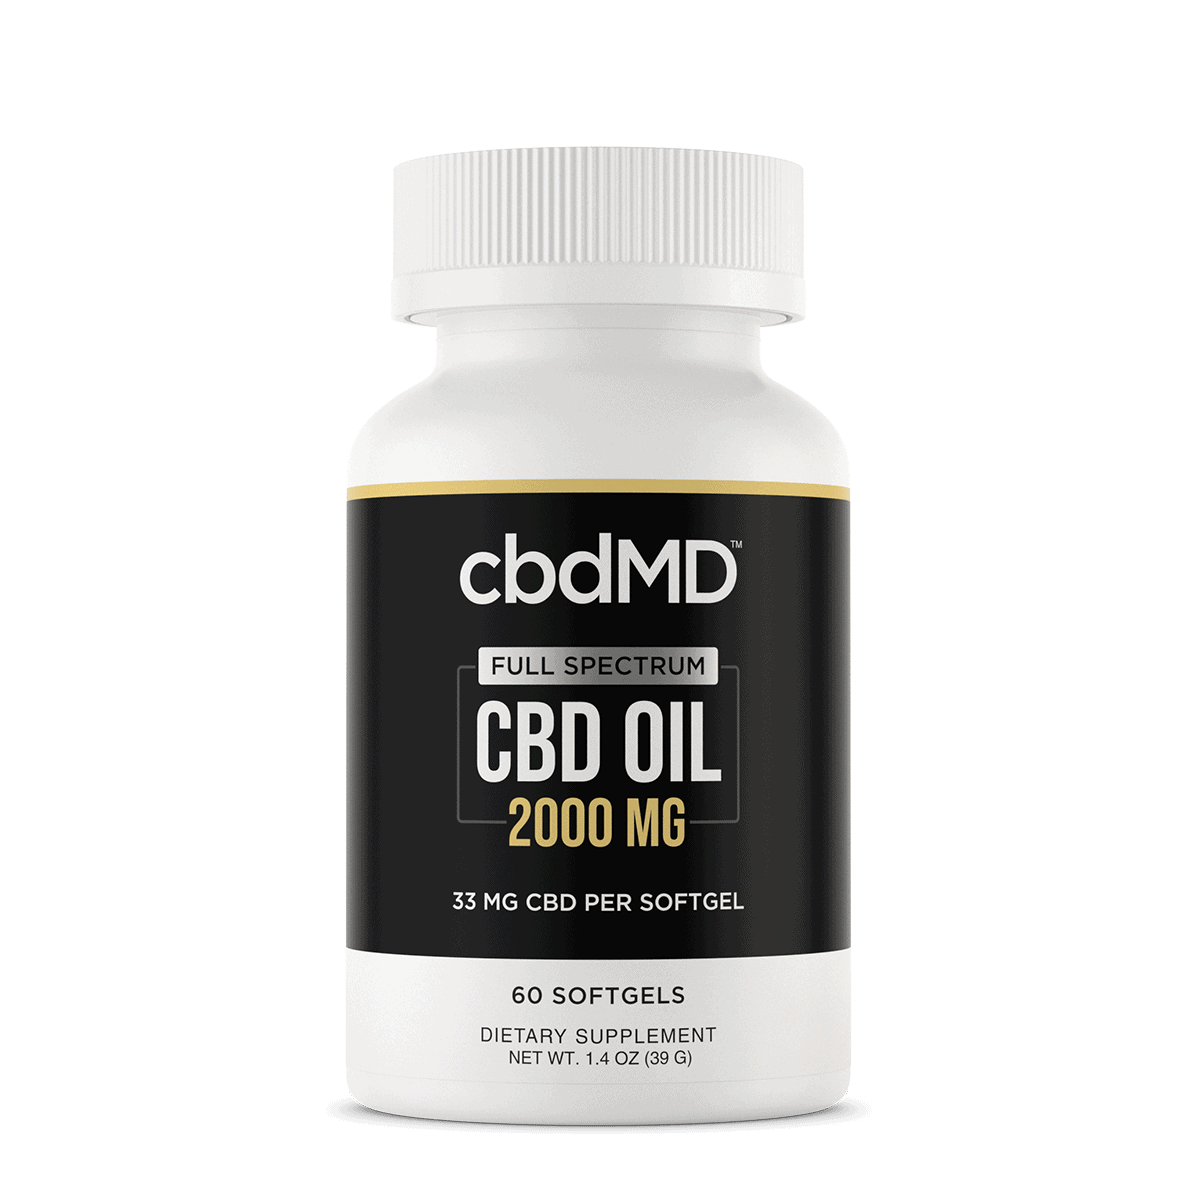 cbdMD, CBD Oil Softgels, Full Spectrum, 60-Count, 2000mg CBD